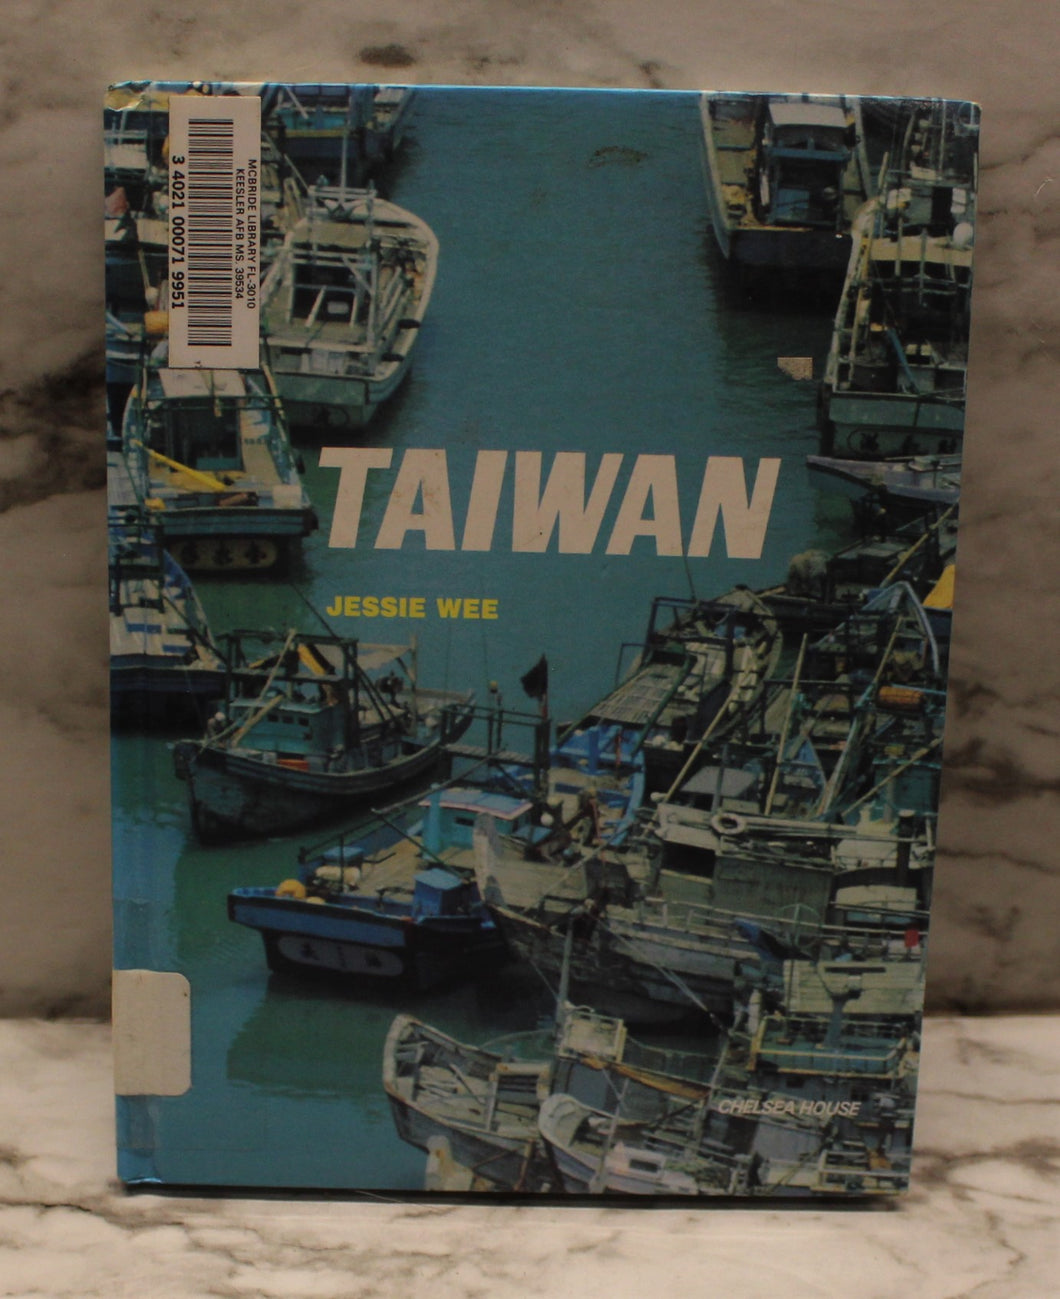 Taiwan - Jessie Wee - 1-55546-180-8 - Used